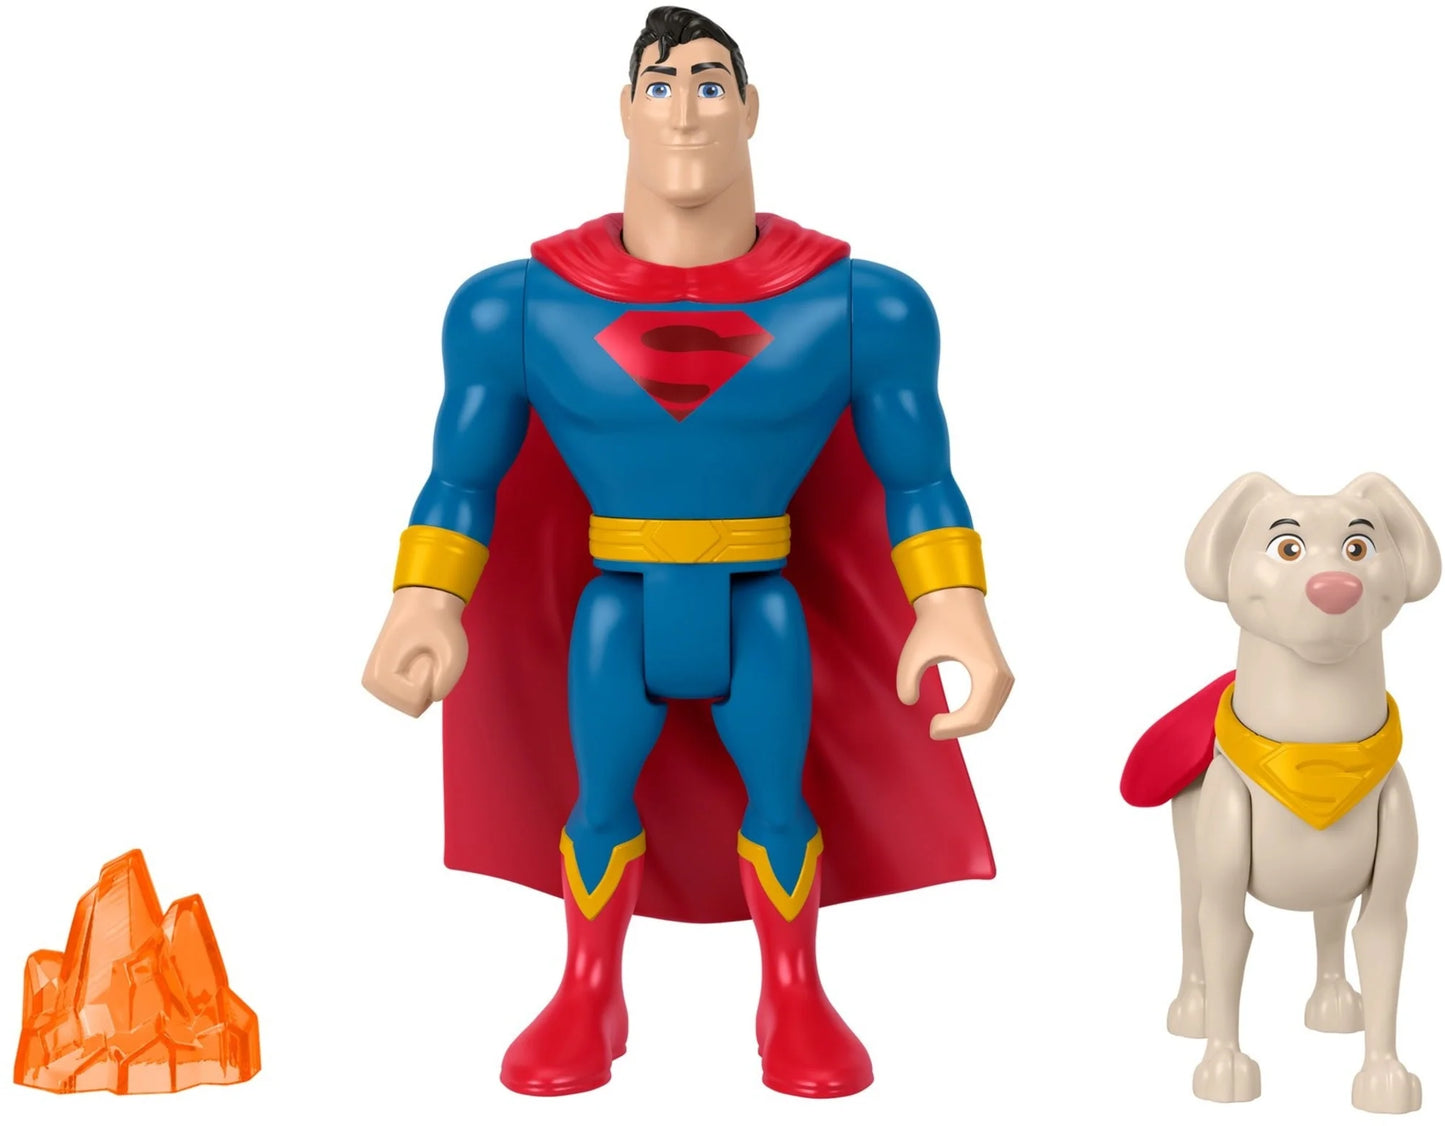 Fisher-Price - DC League Of Super-Pets Superman & Krypto Figures